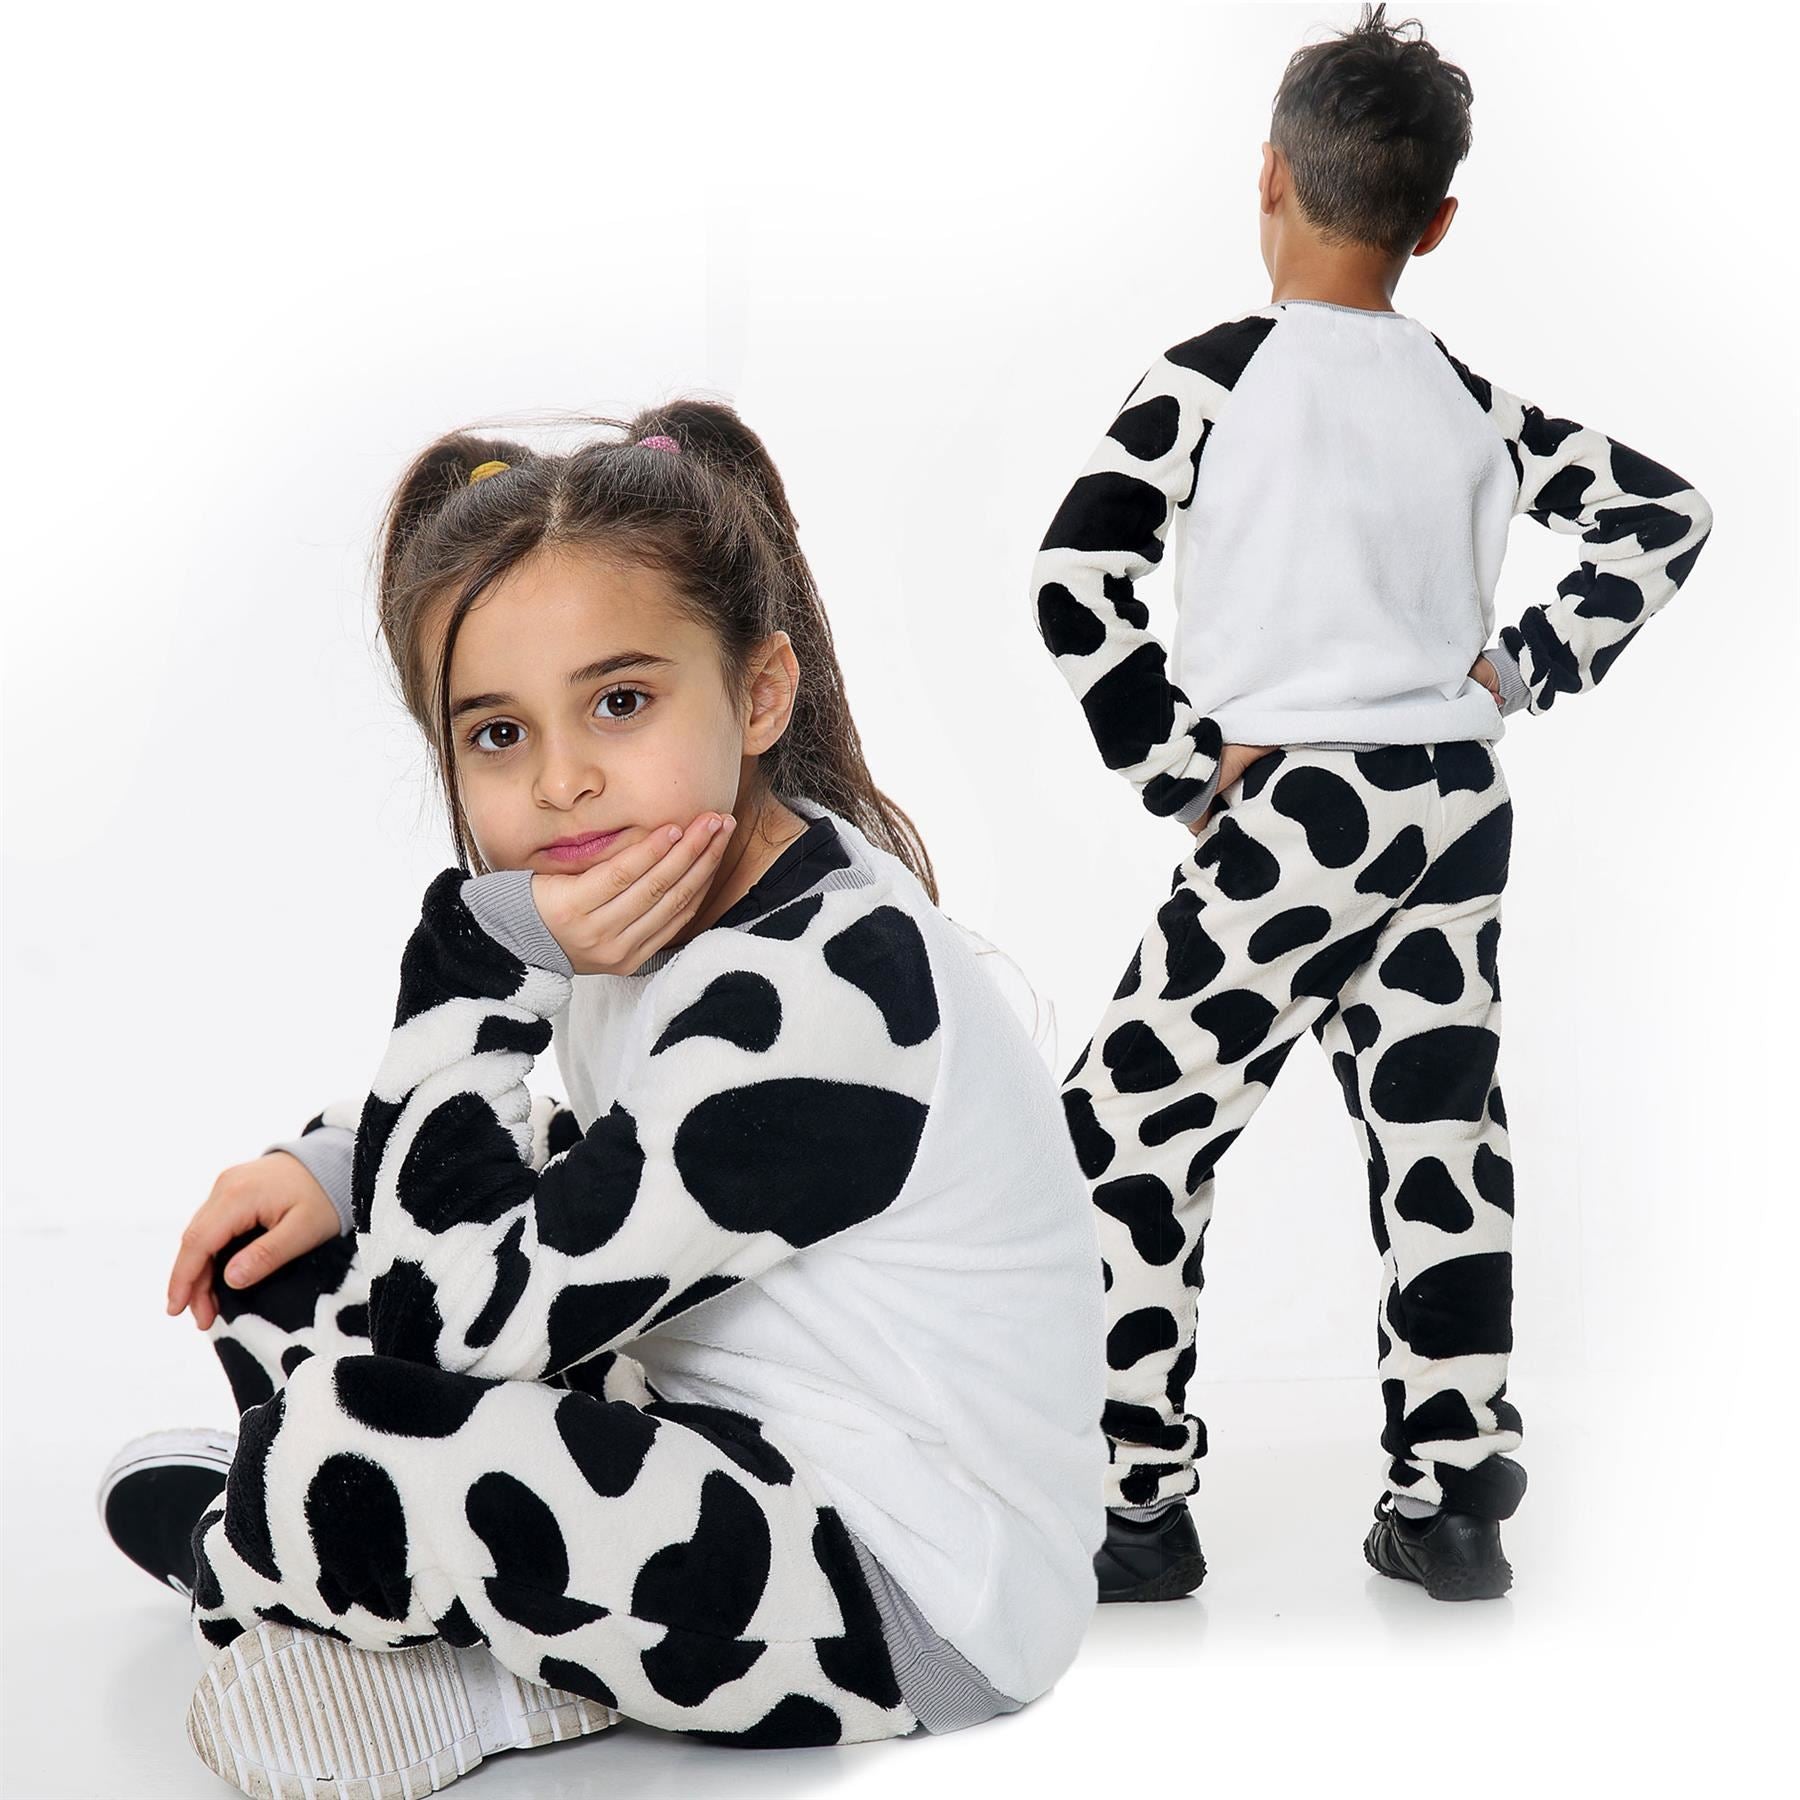 Kids Cow Print Sleeve Pyjamas Sleepsuit Costume For Girls Boys Age 5-13 Years